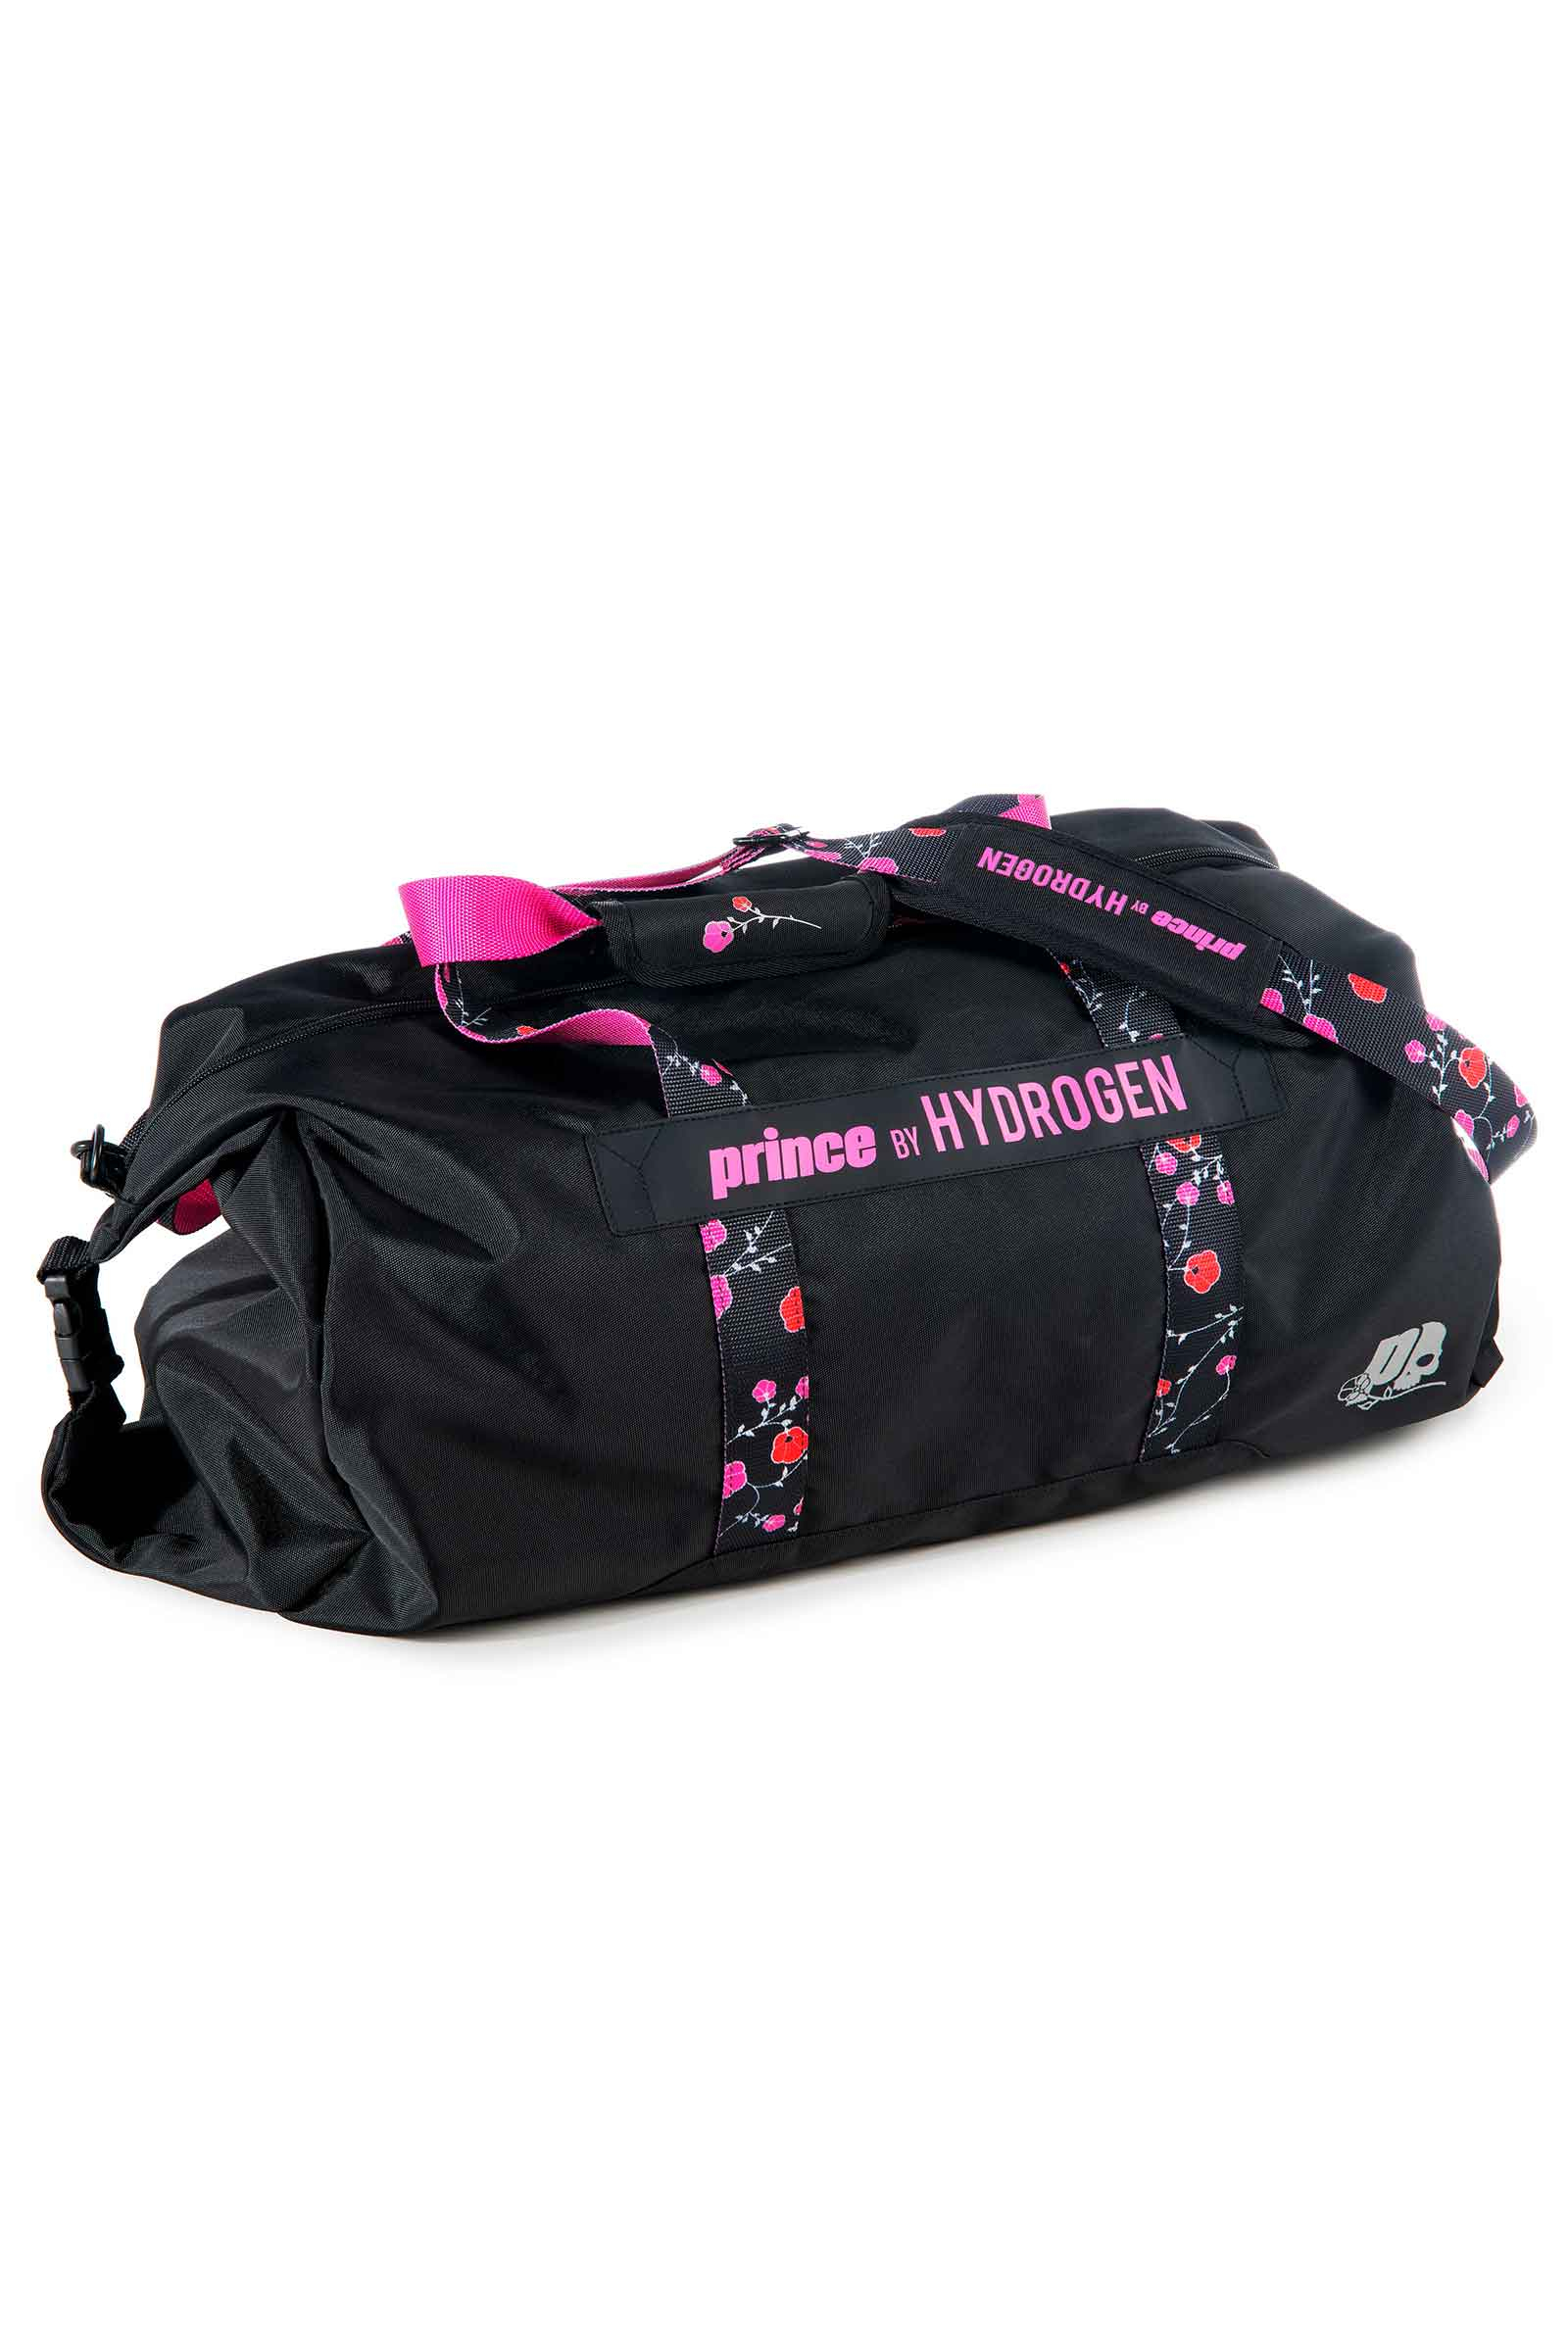 LADY MARY BAG PRINCE BY HYDROGEN - BLACK,FUCHSIA FLUO - Hydrogen - Luxury Sportwear